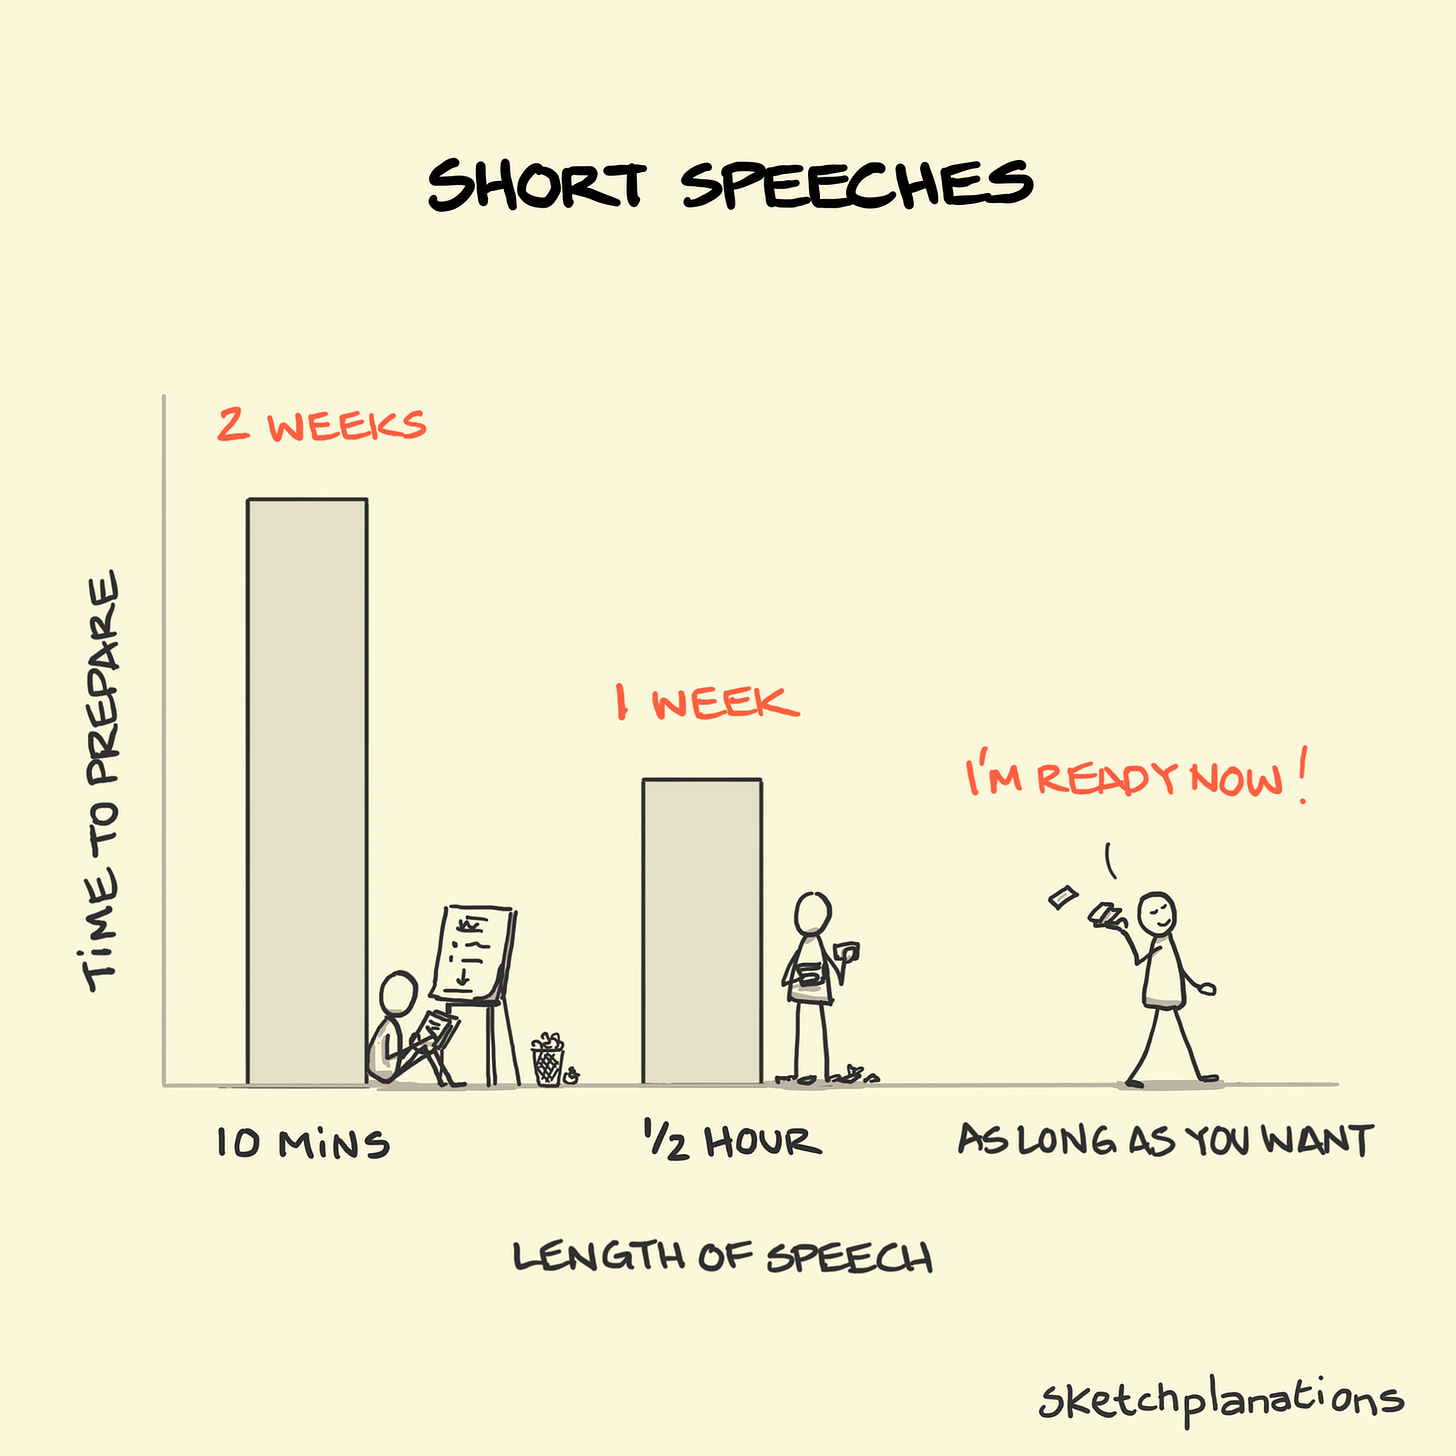 Short speeches - Sketchplanations